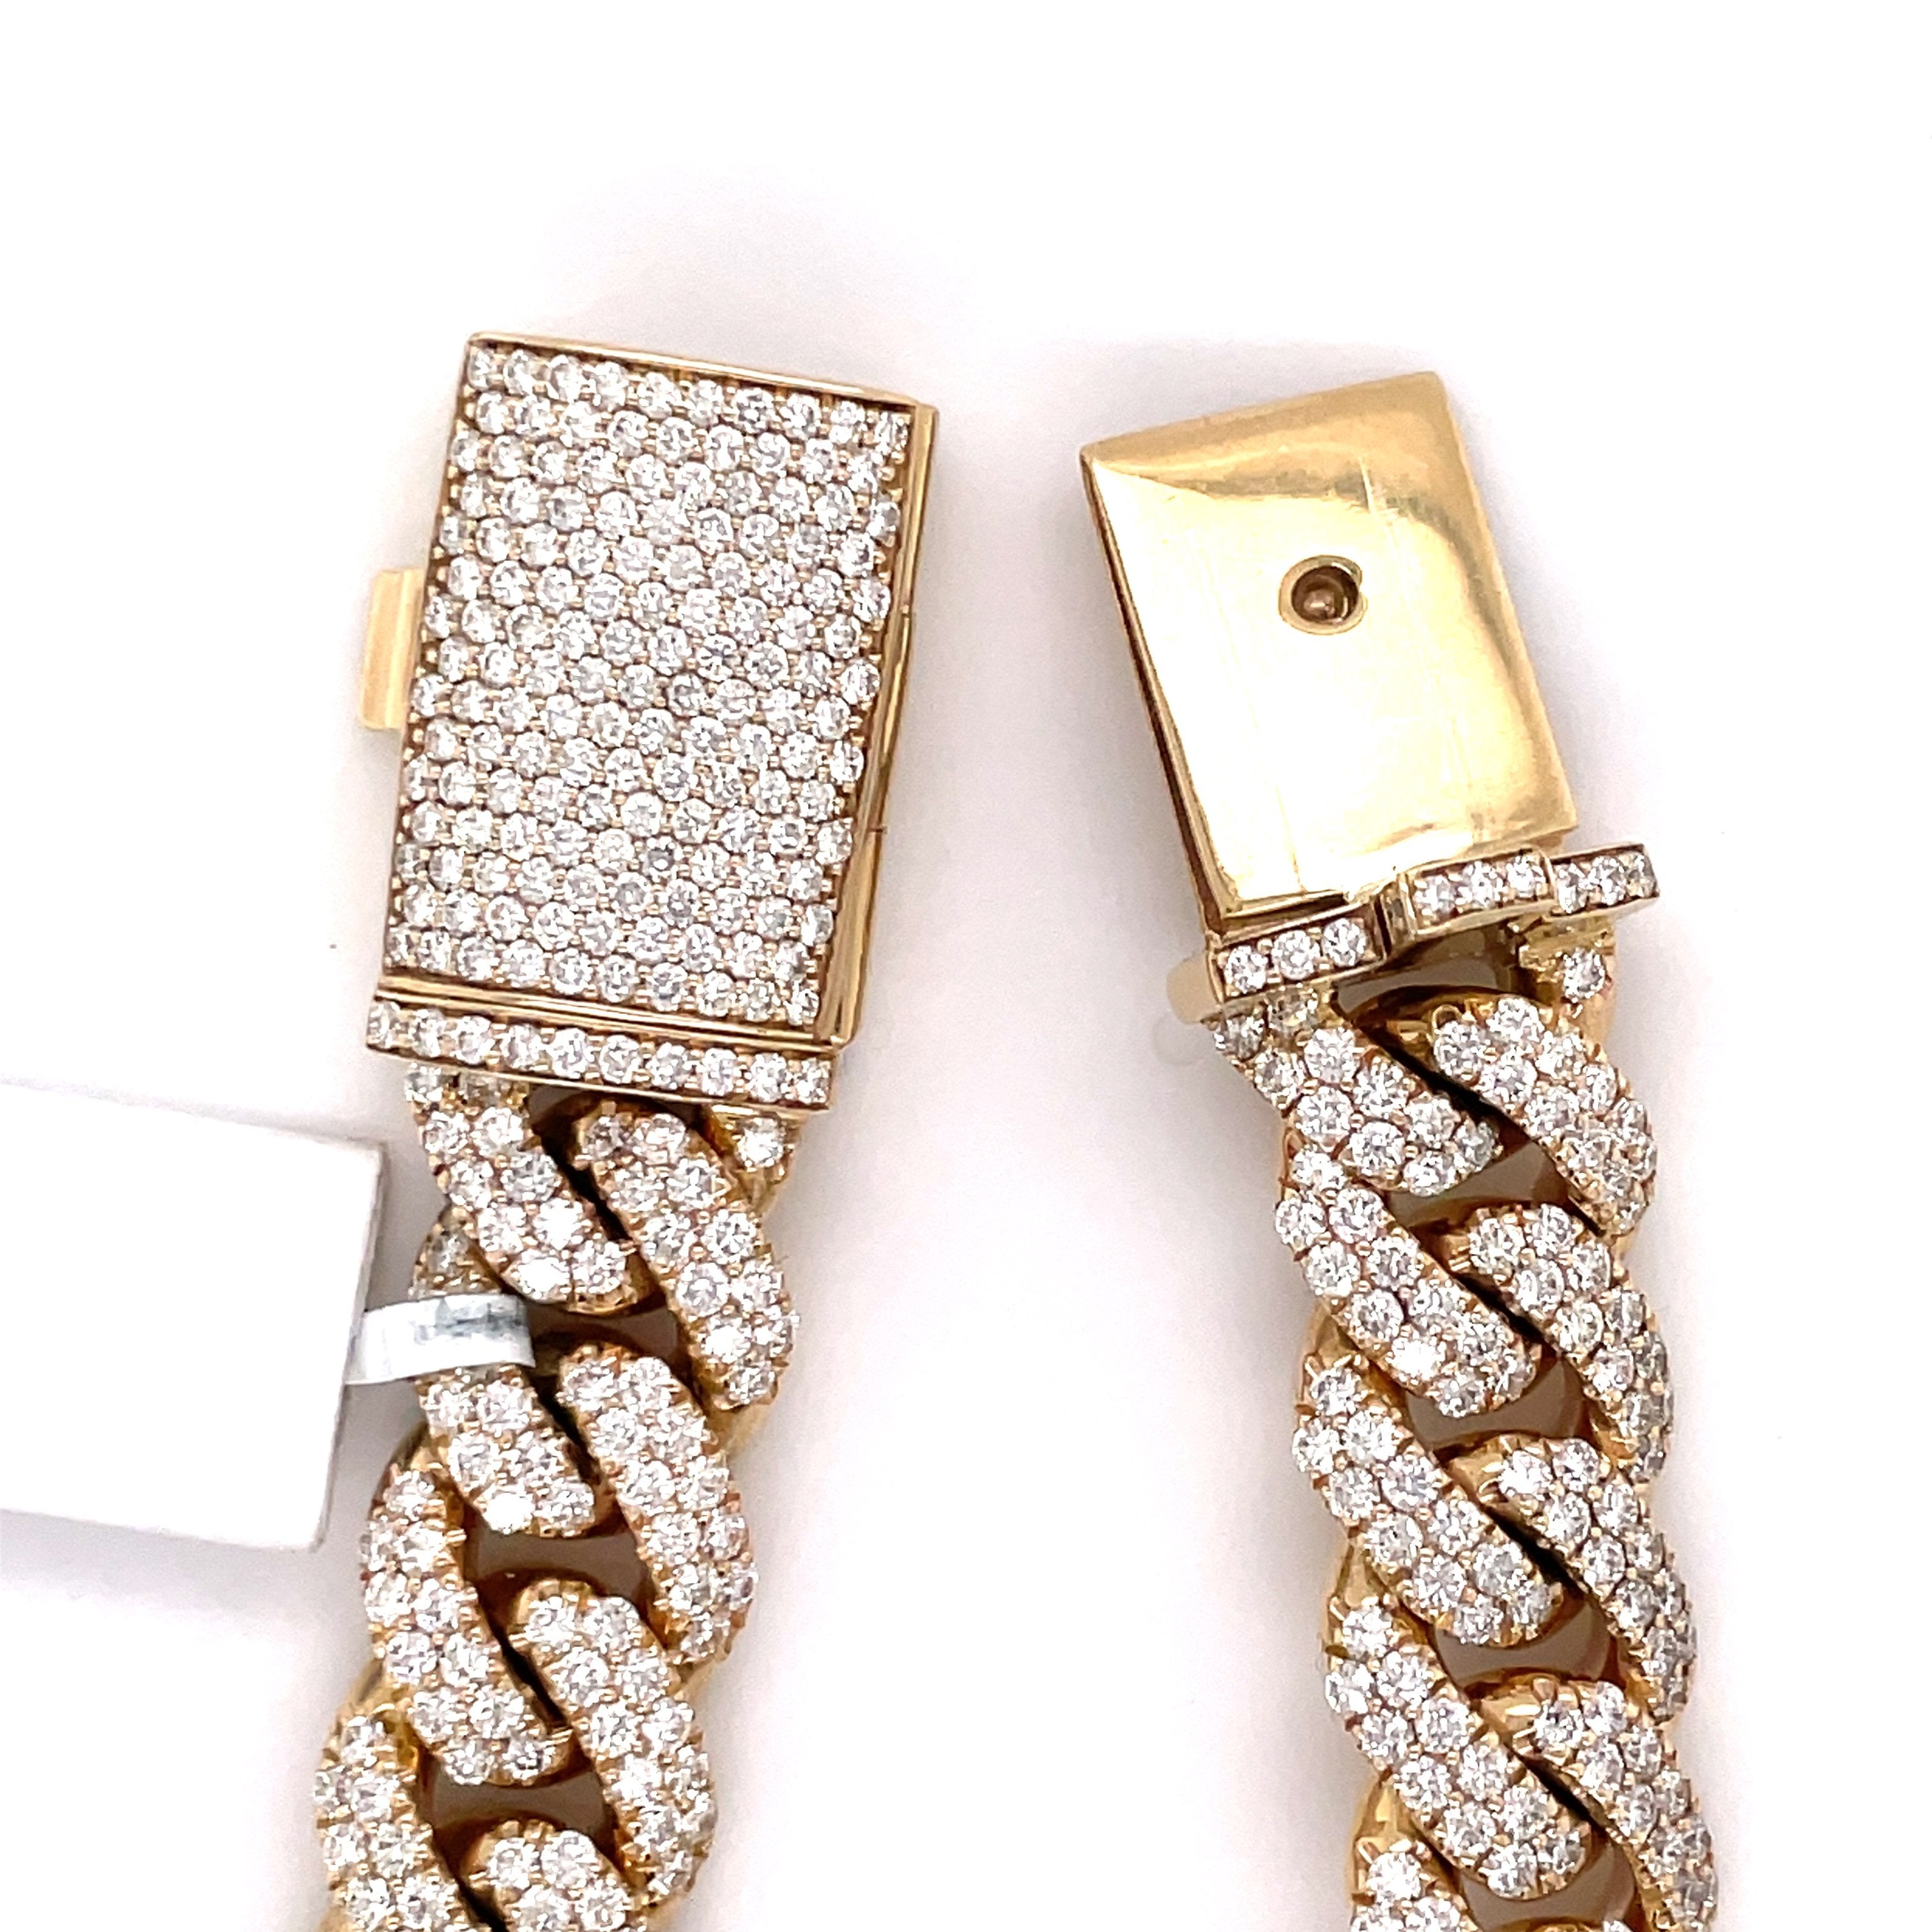 14.00 CT. Diamond Cuban Bracelet in Gold - 13.50mm - White Carat - USA & Canada